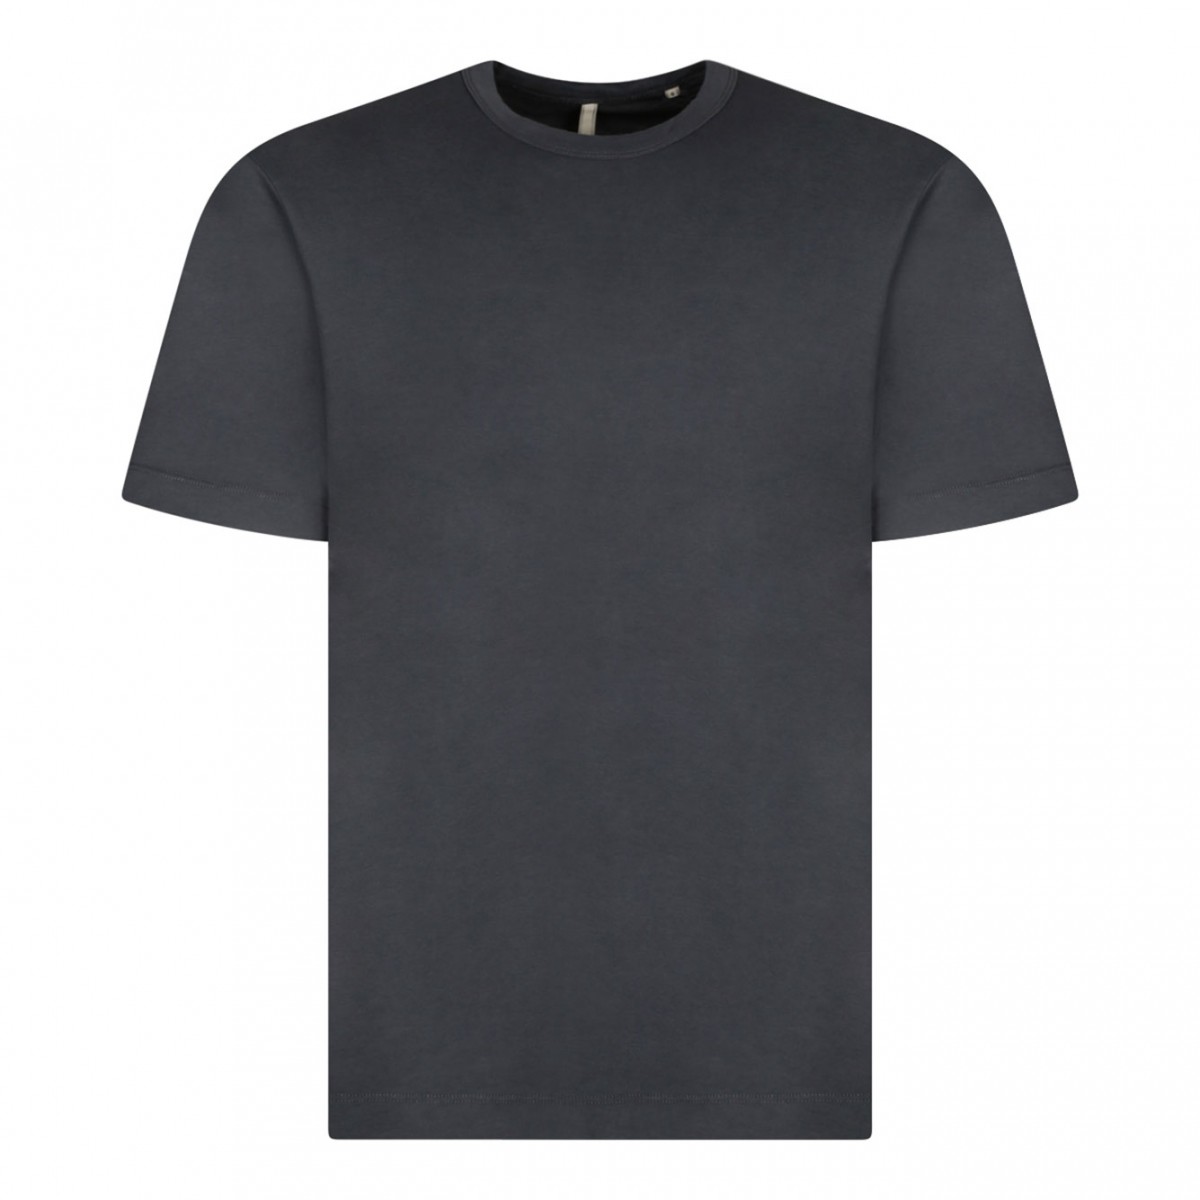 Anthracite Cotton T-Shirt